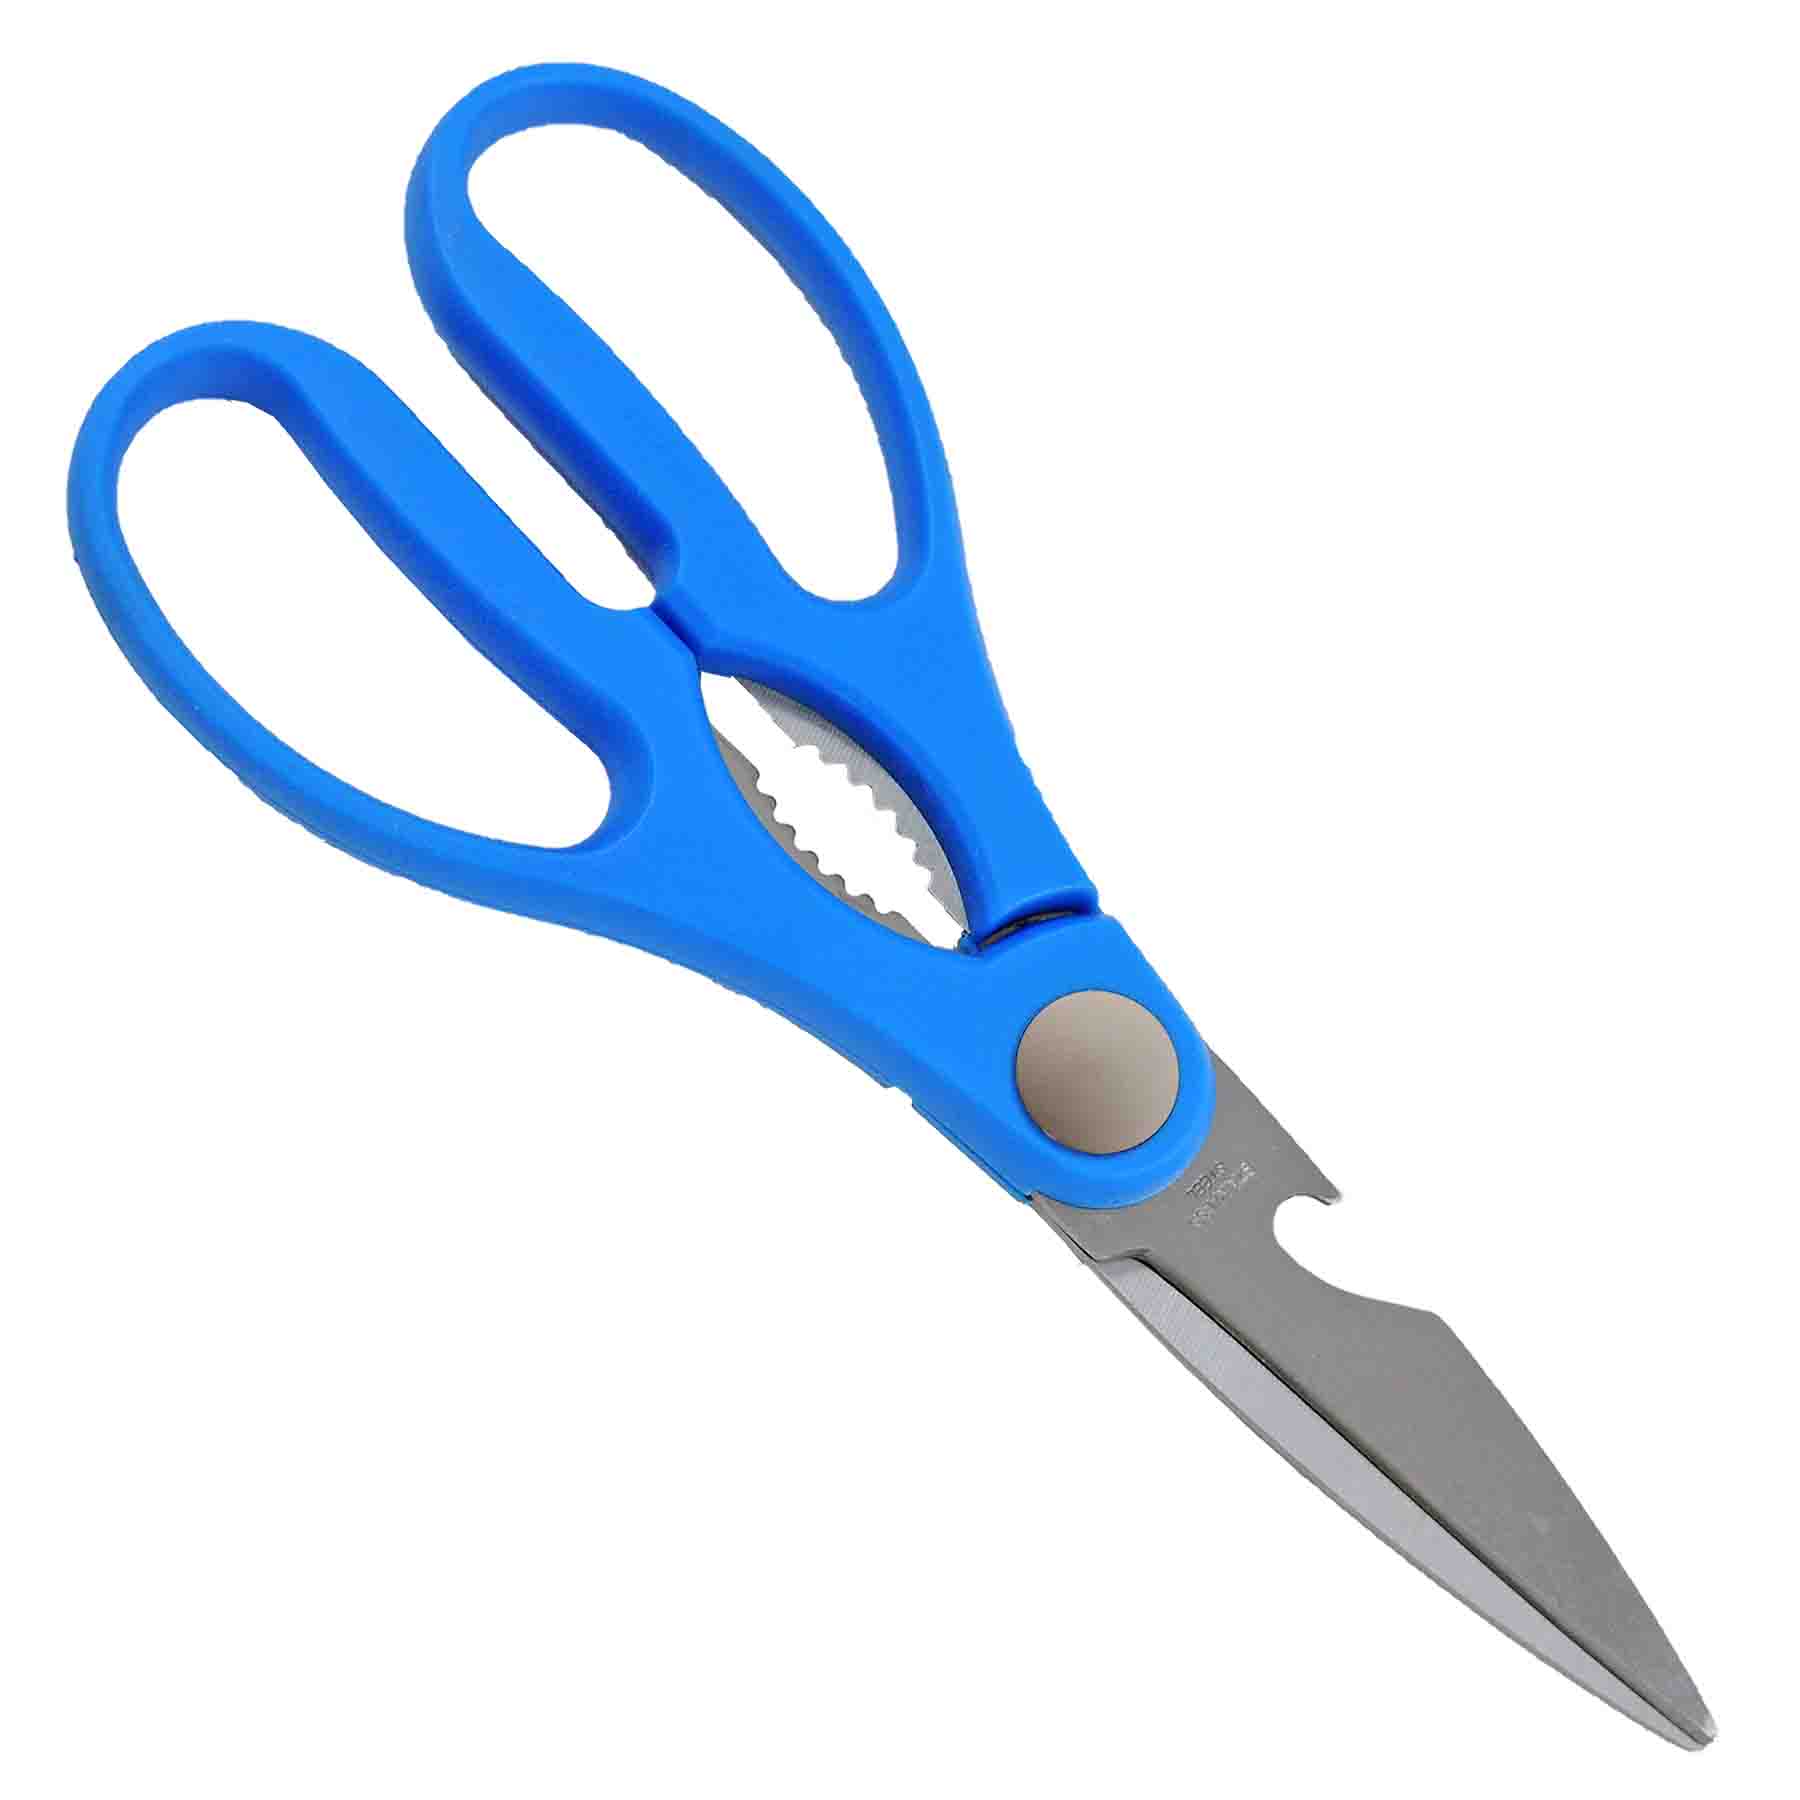 Shawshank LEDz - All Products - 8 Multi Purpose Scissors